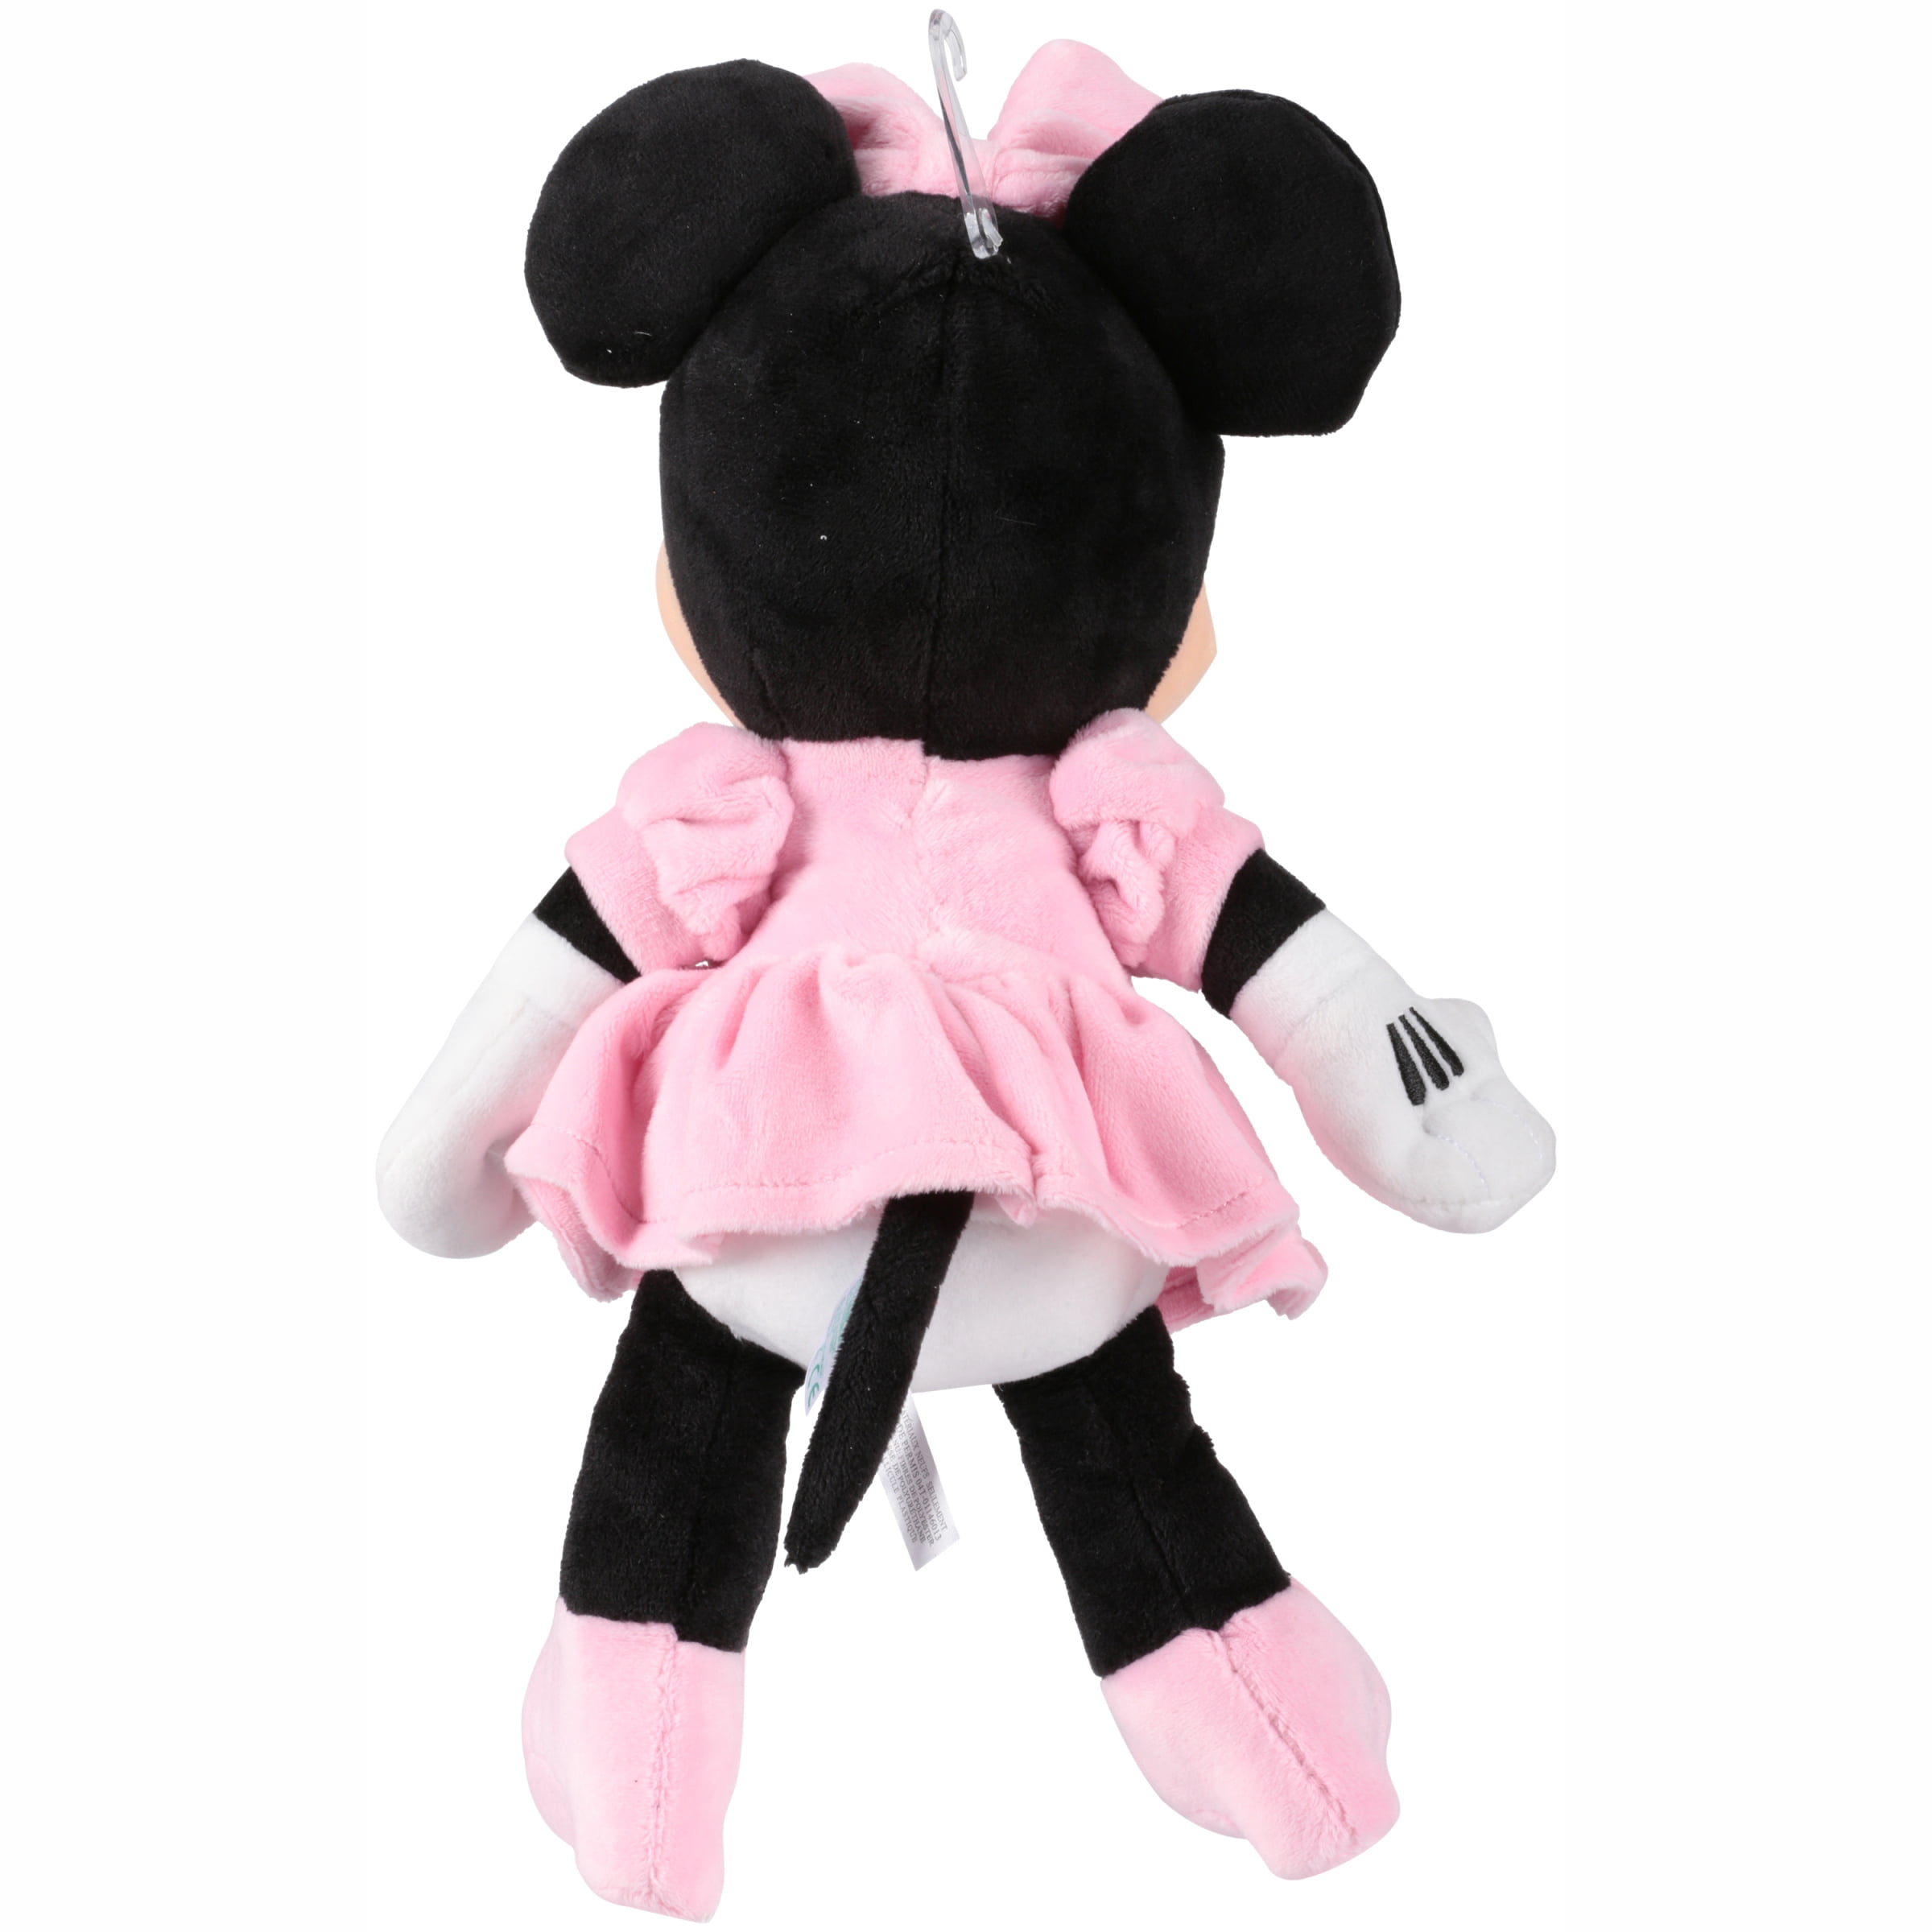 Disney Baby Minnie Mouse Plush Doll Walmart Com Walmart Com